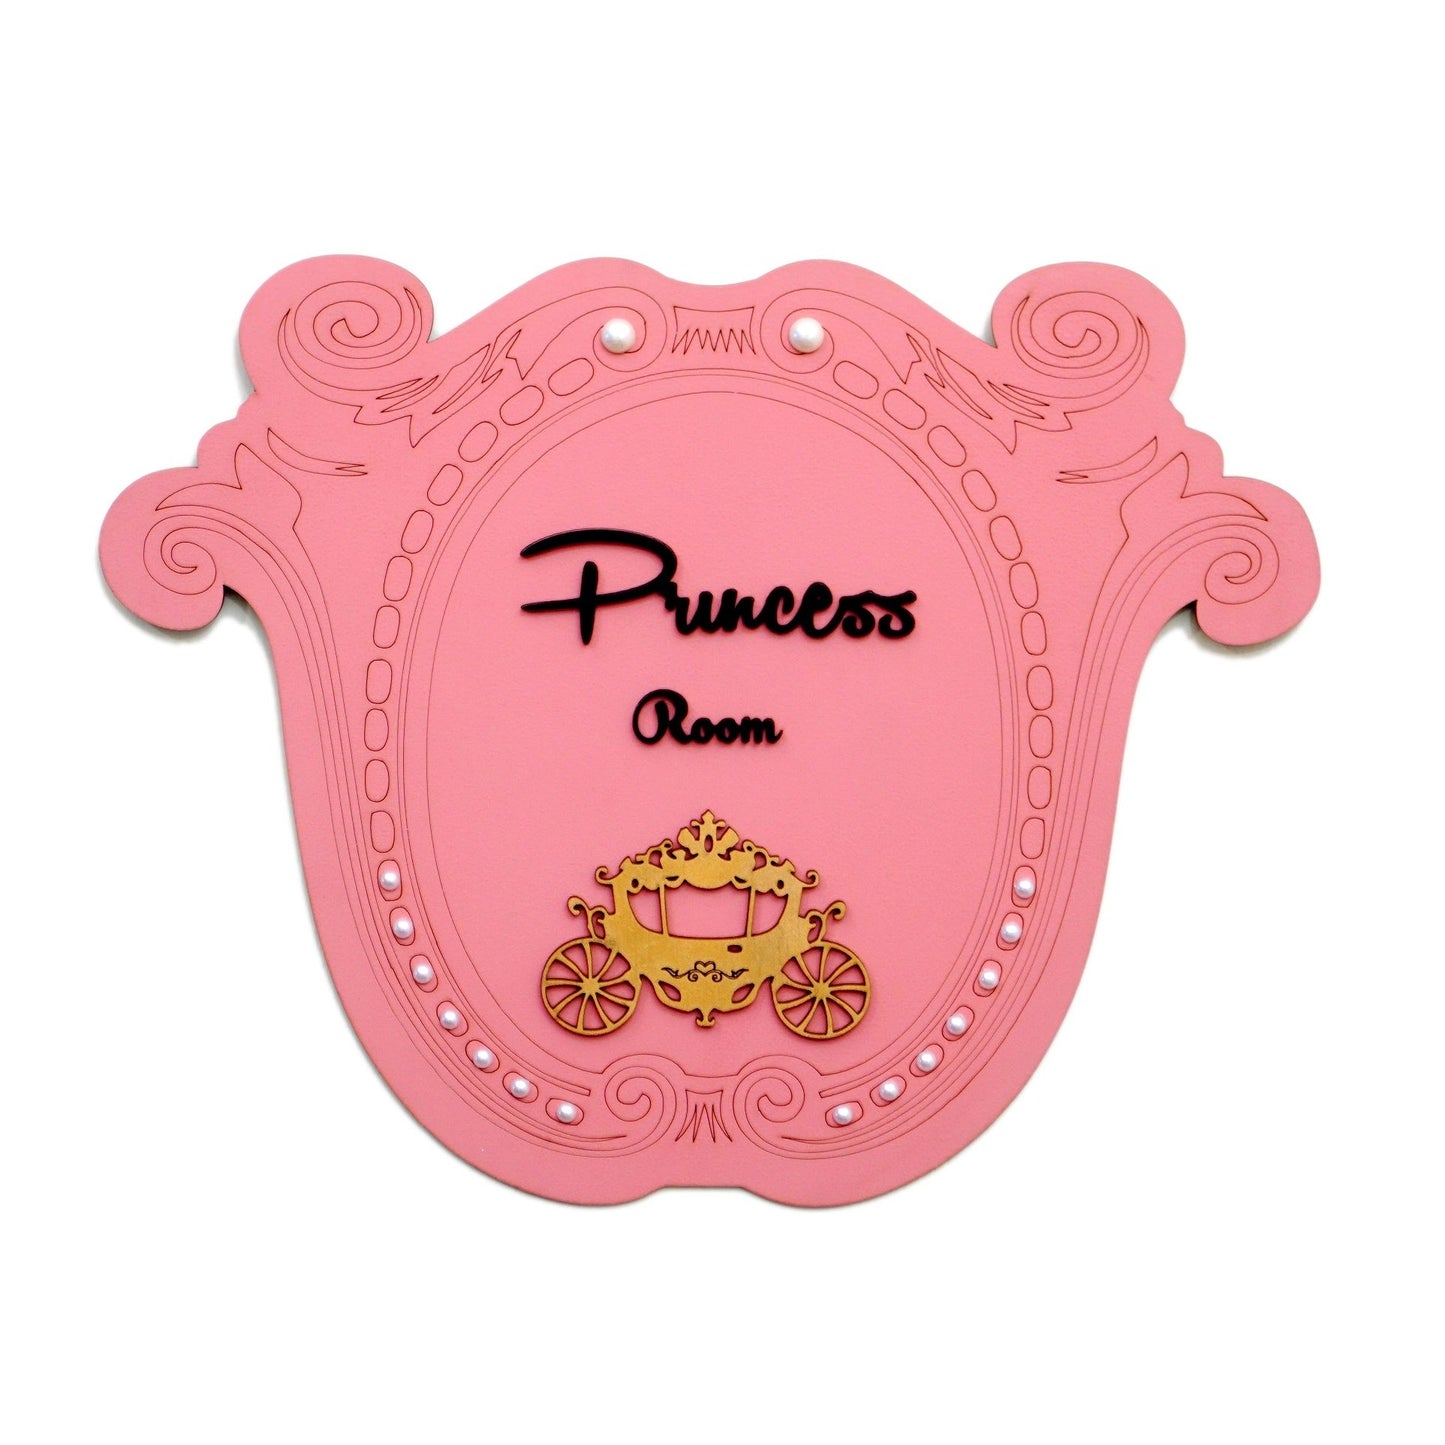 Royal Princess Room Wooden Wall Signage 14 X 11 Inches - Pink